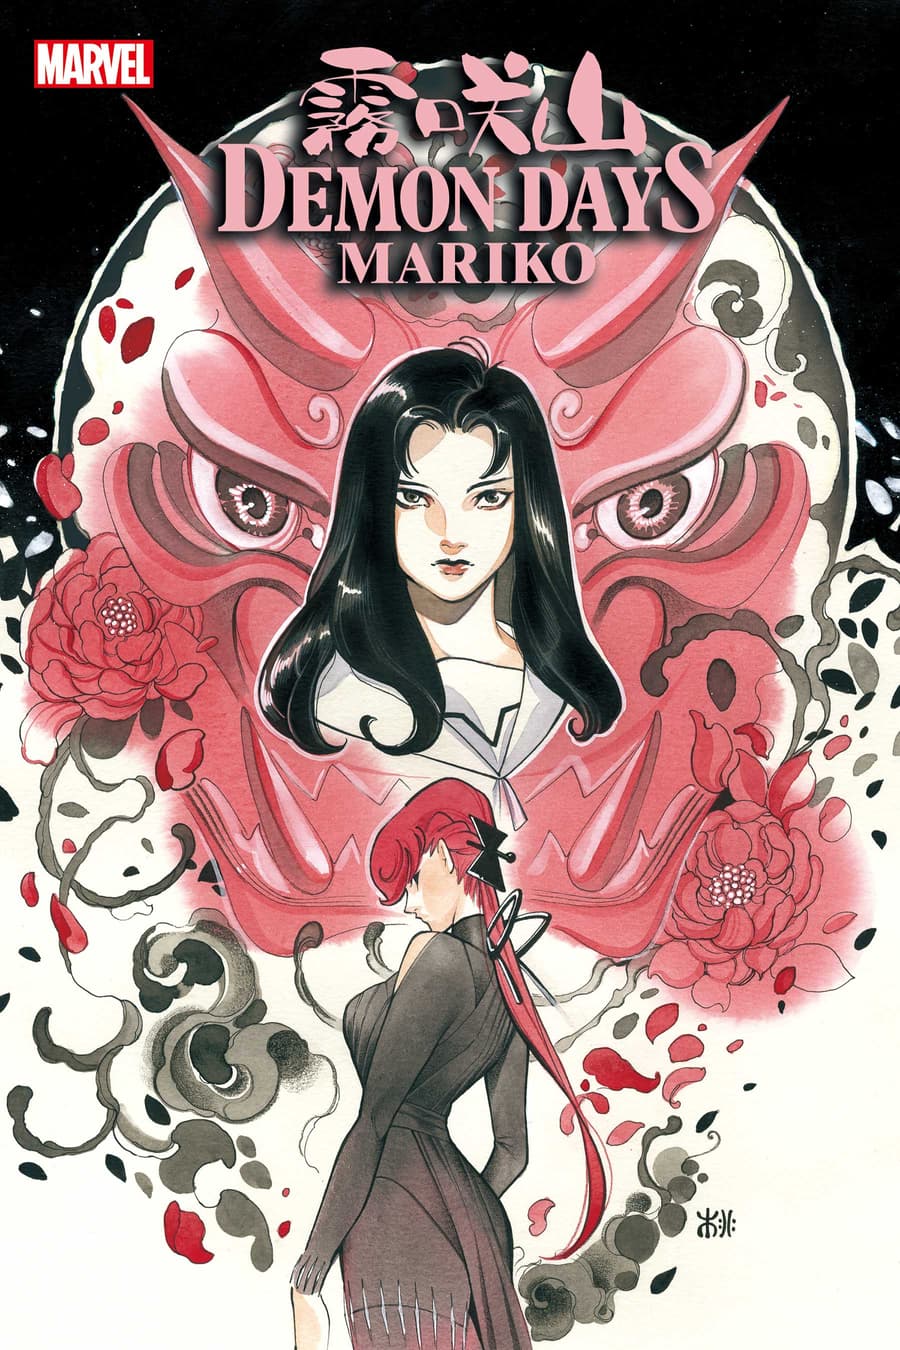 DEMON DAYS: MARIKO #1 cover by Peach Momoko